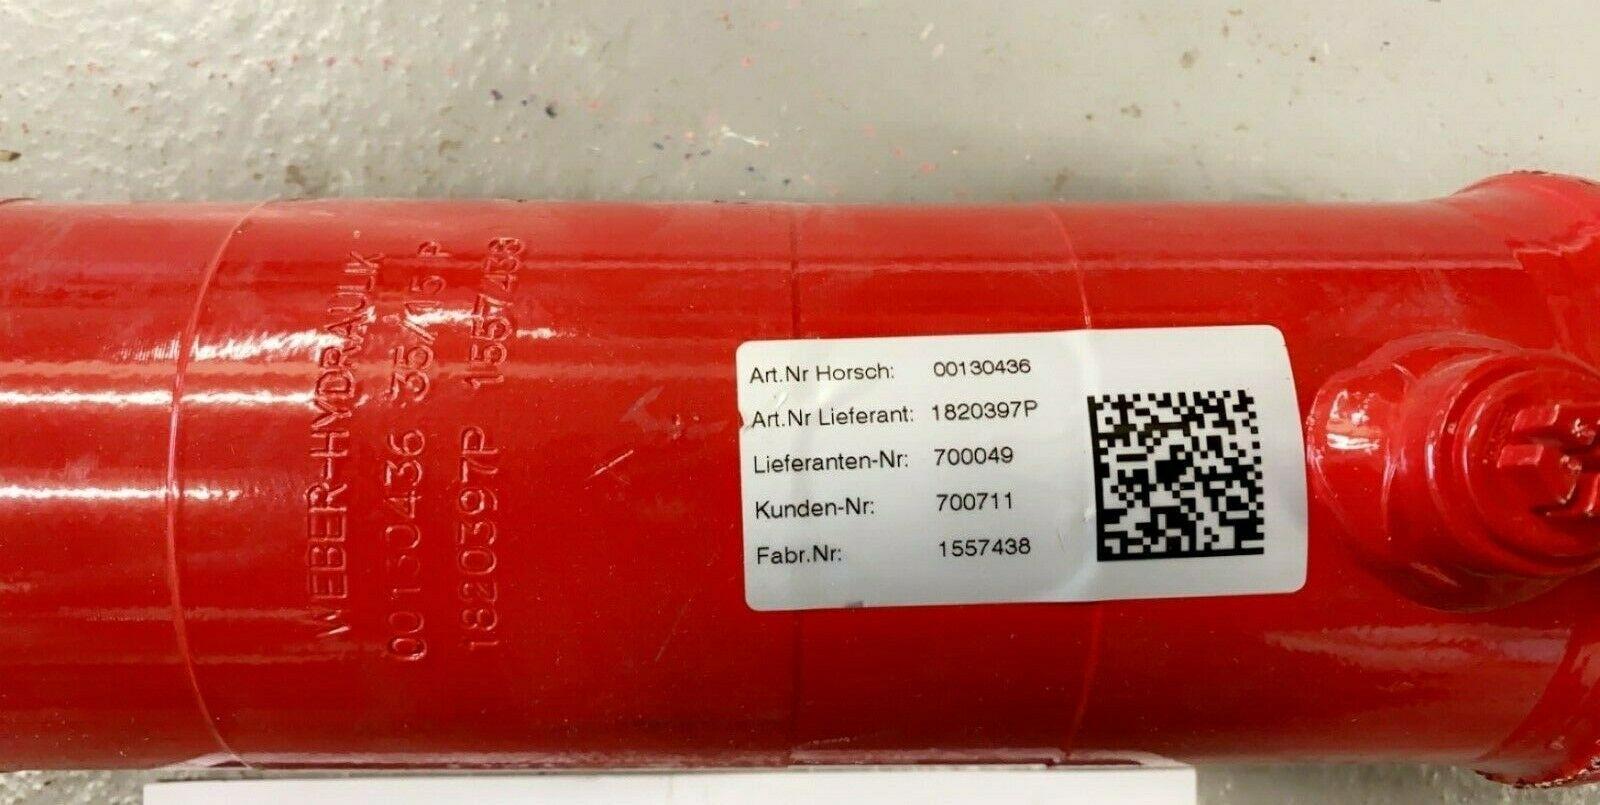 HORSCH Hydraulic Cylinder - 00130436